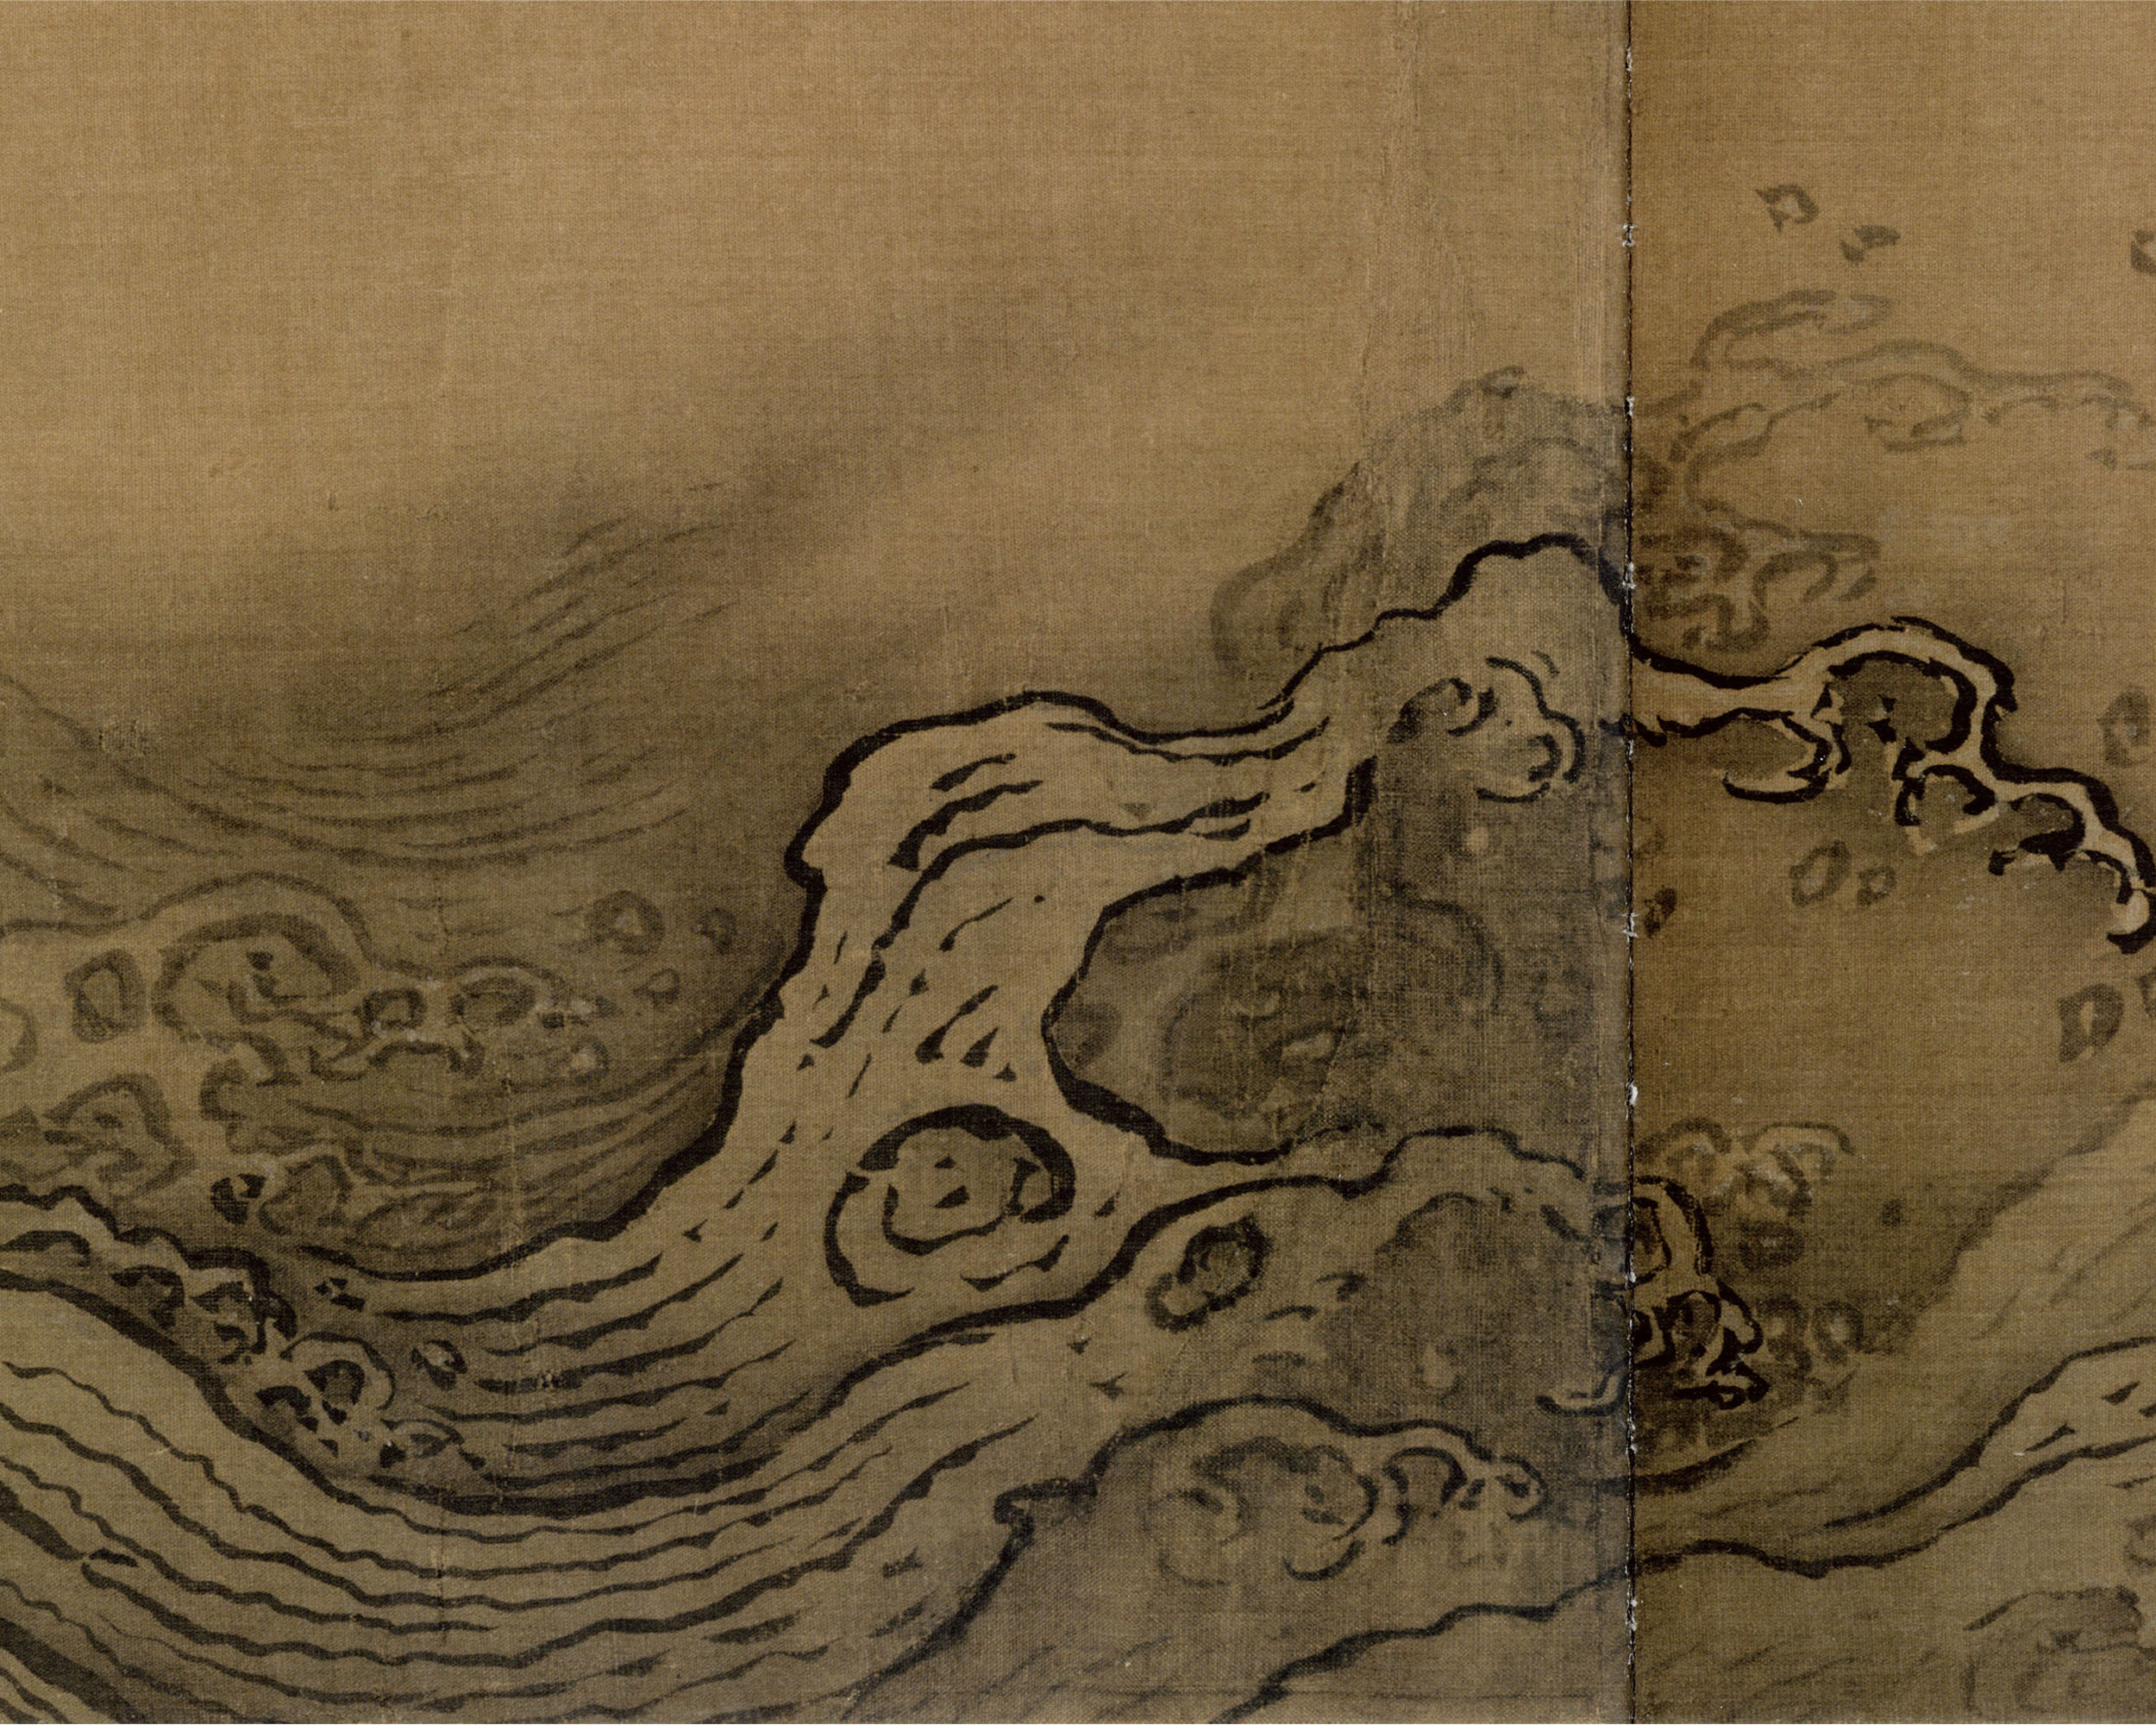 Ma Yuan, Water Studies